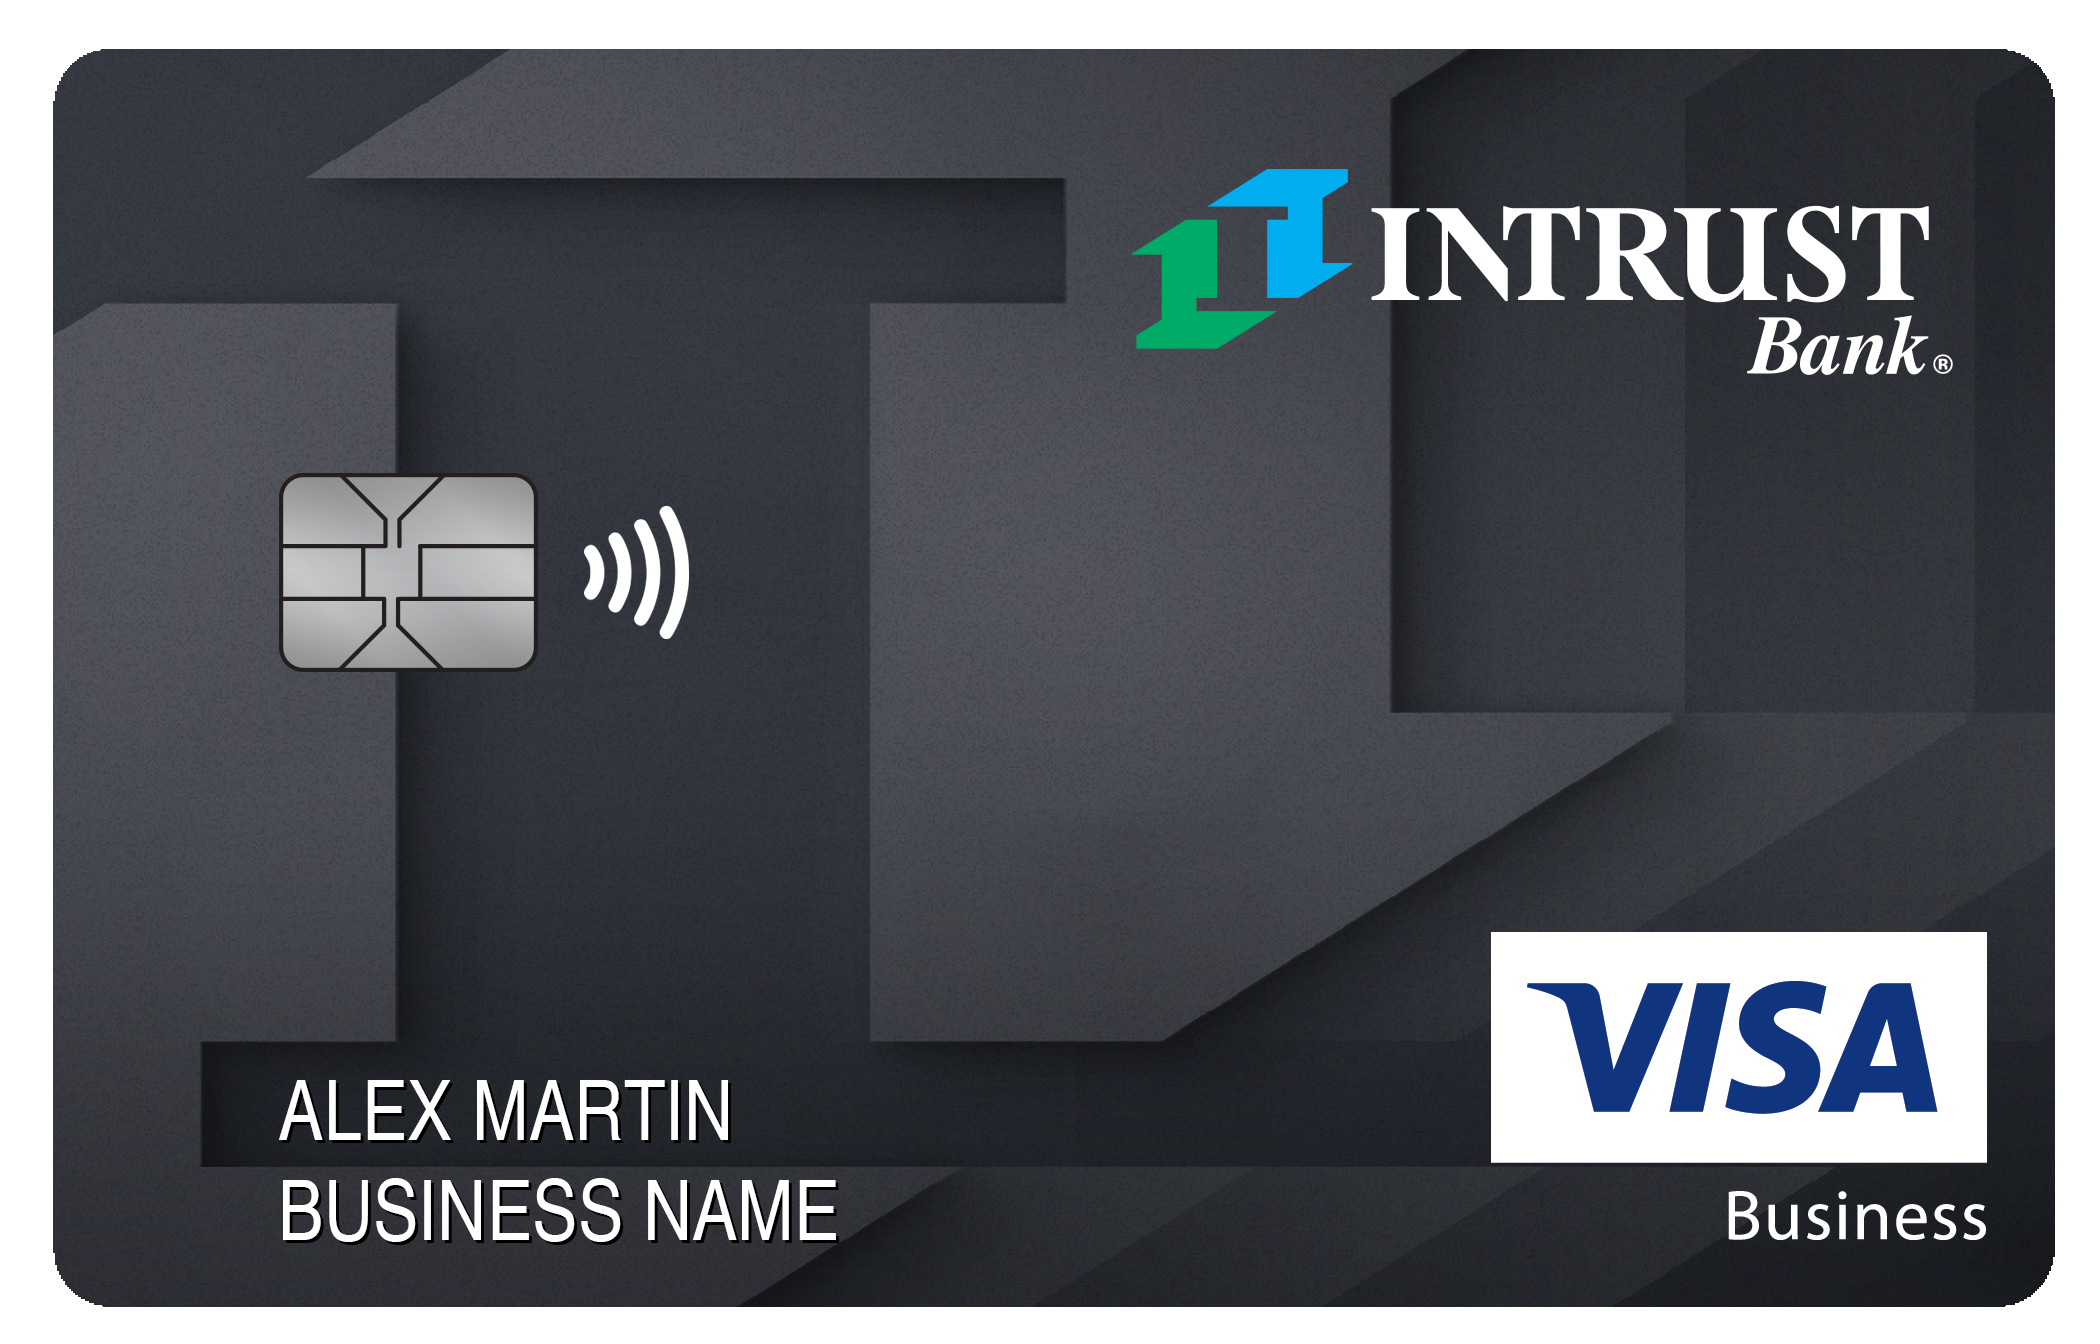 INTRUST Bank Business Real Rewards Card